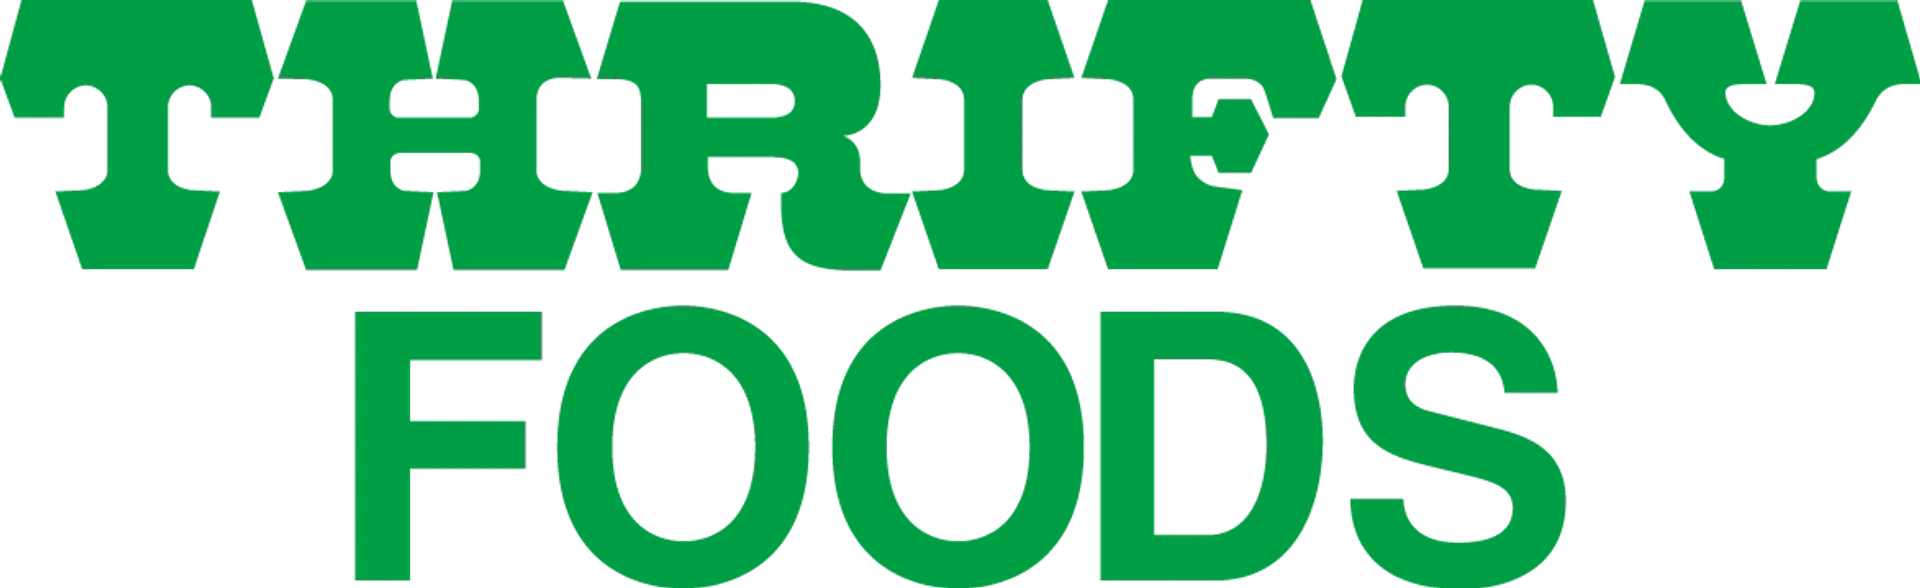 THRIFTY FOODS logo